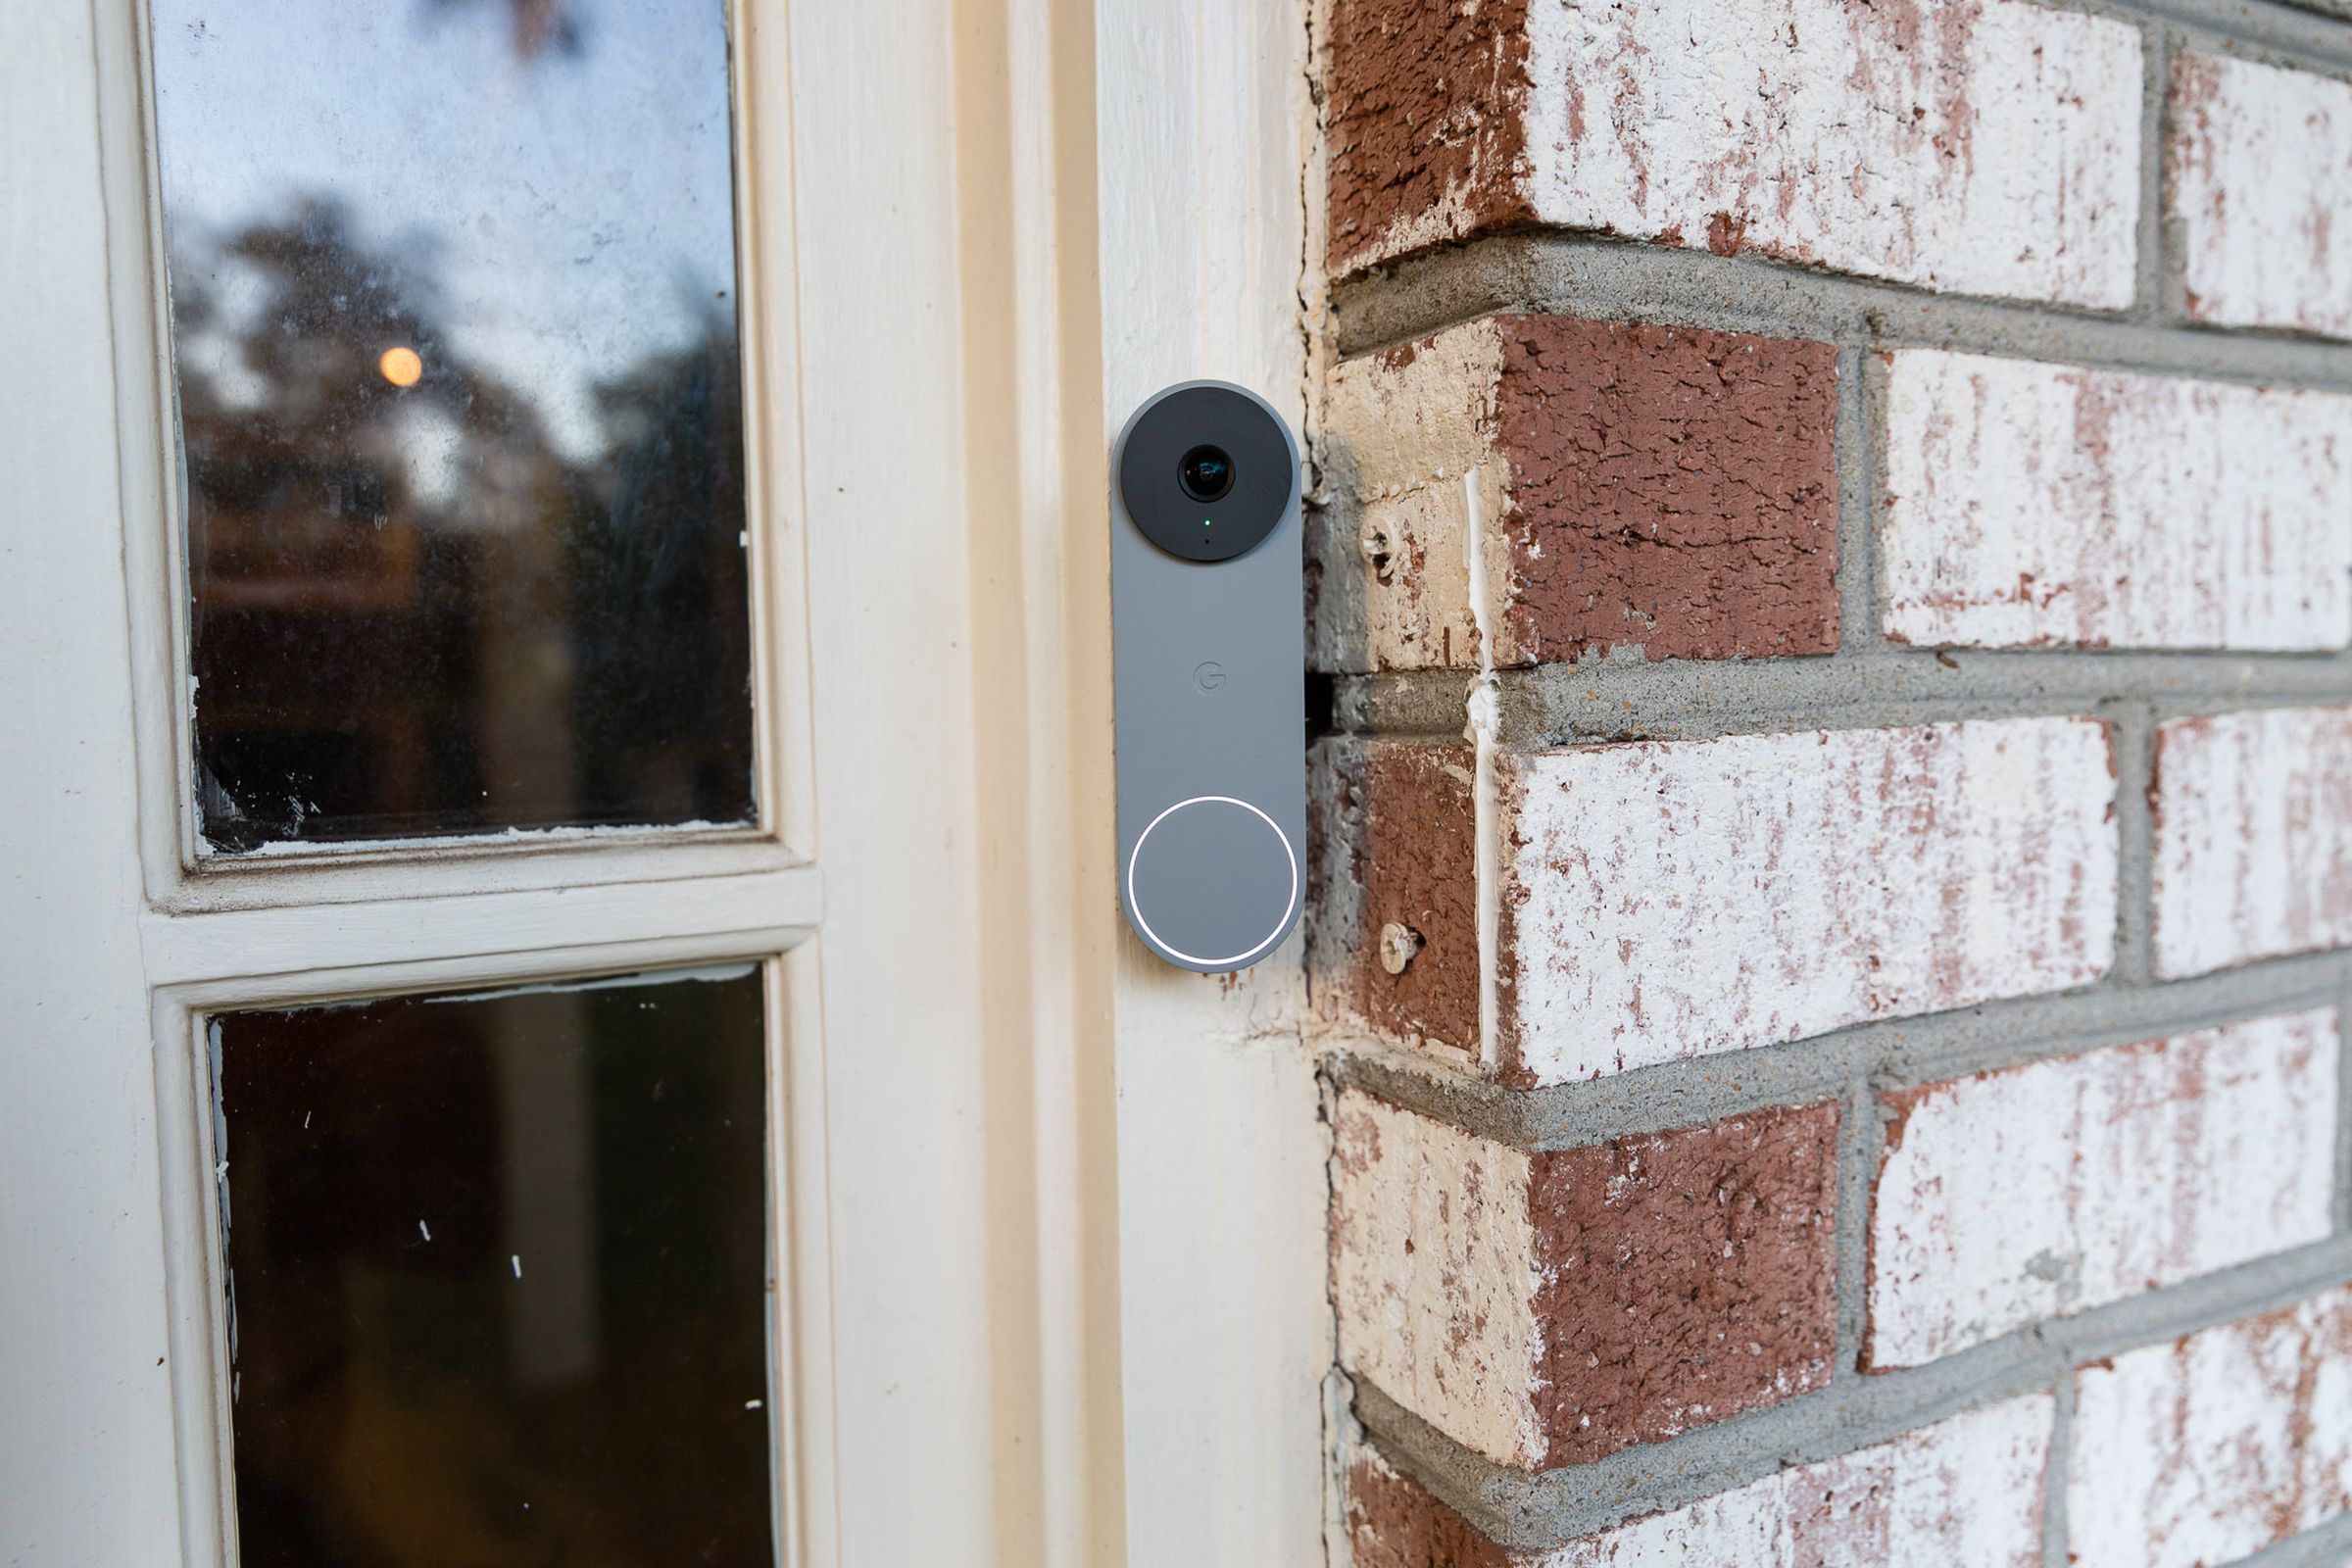 Google Nest smart doorbell attached to the side of a door.